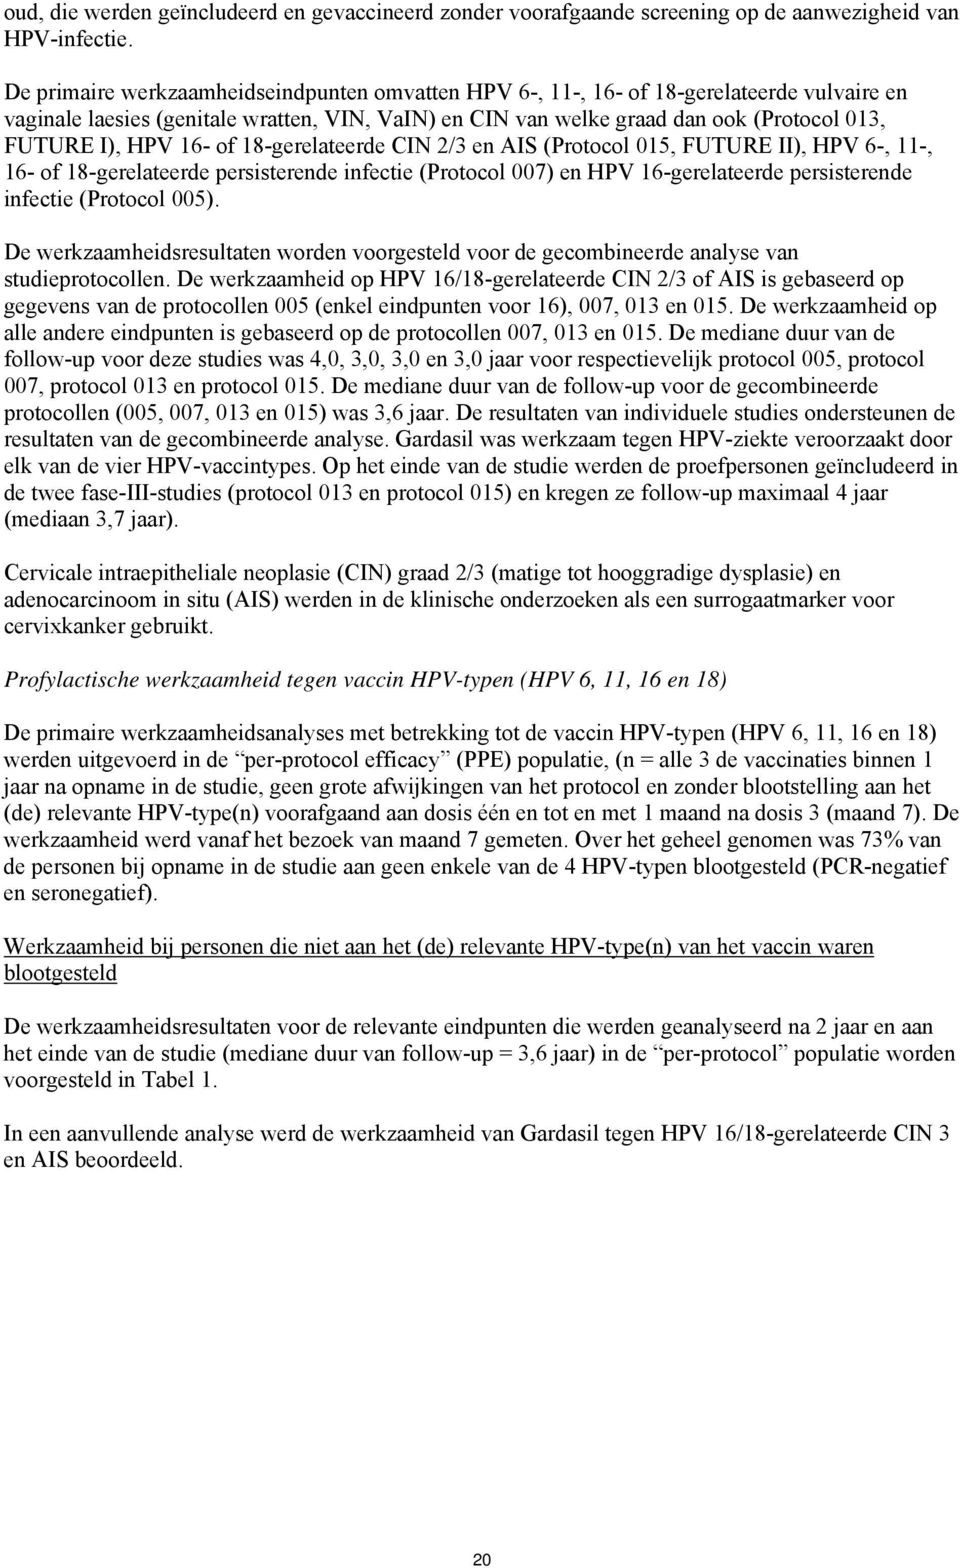 HPV 16- of 18-gerelateerde CIN 2/3 en AIS (Protocol 015, FUTURE II), HPV 6-, 11-, 16- of 18-gerelateerde persisterende infectie (Protocol 007) en HPV 16-gerelateerde persisterende infectie (Protocol